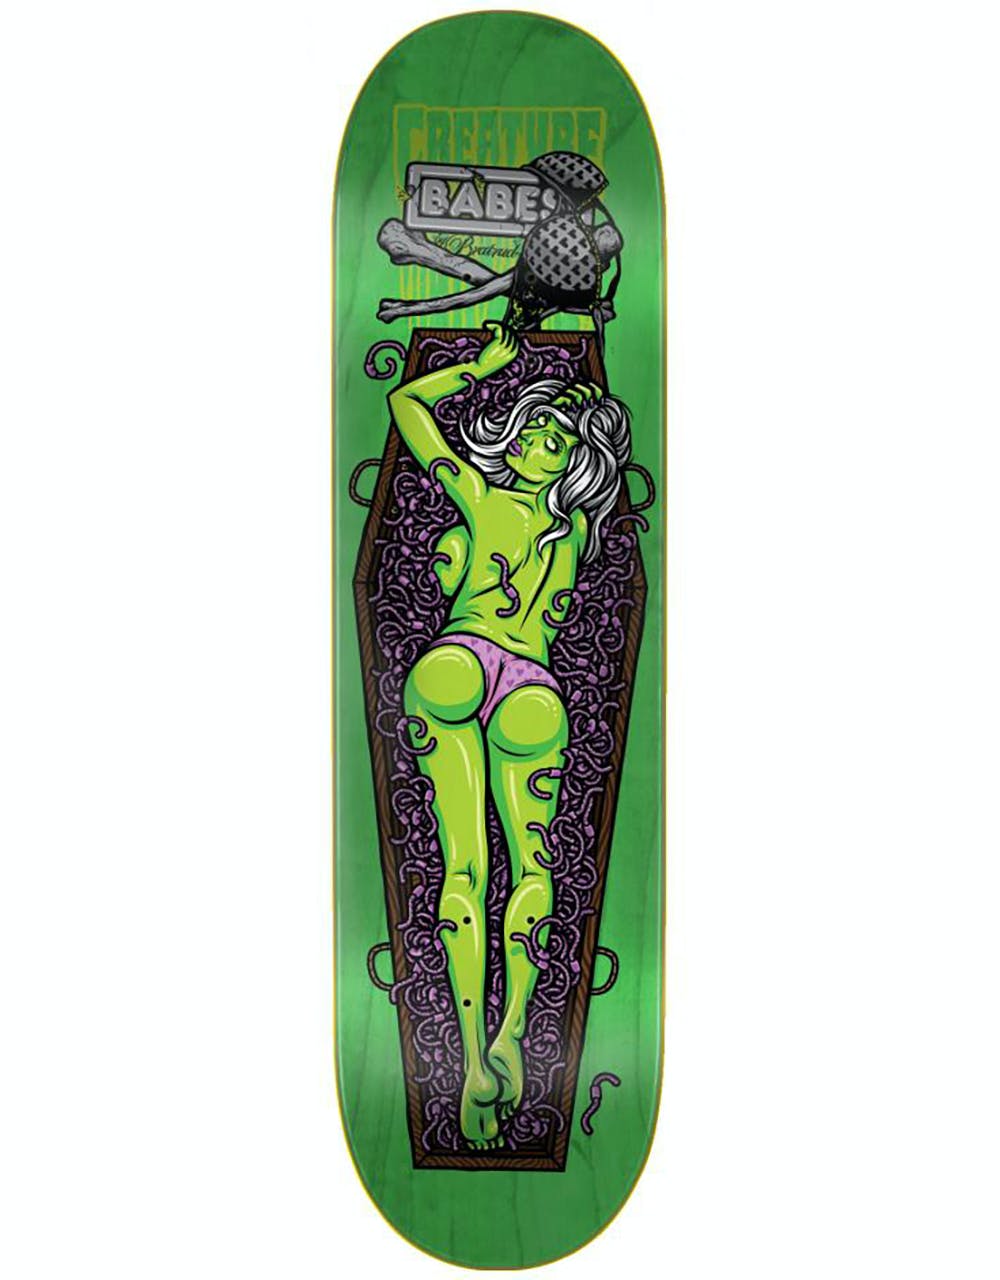 Creature Babes III Skateboard Deck - 8.25"